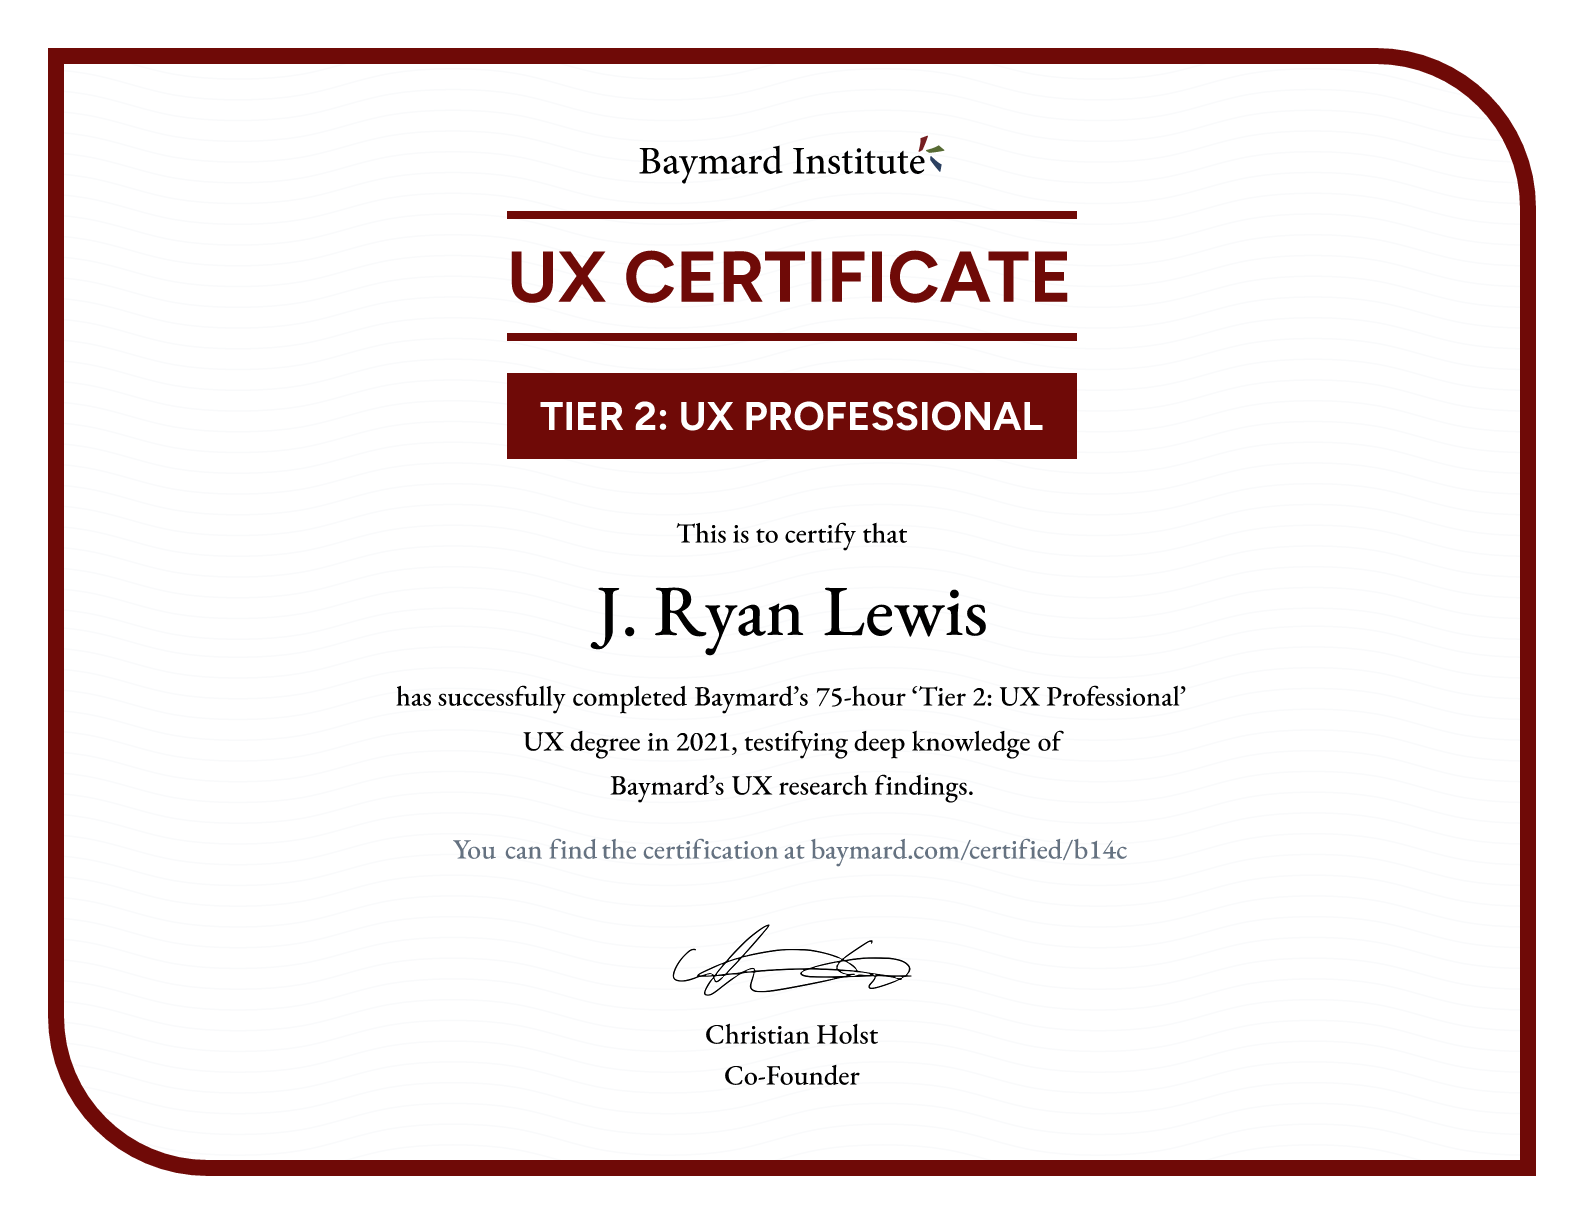 J. Ryan Lewis’s certificate